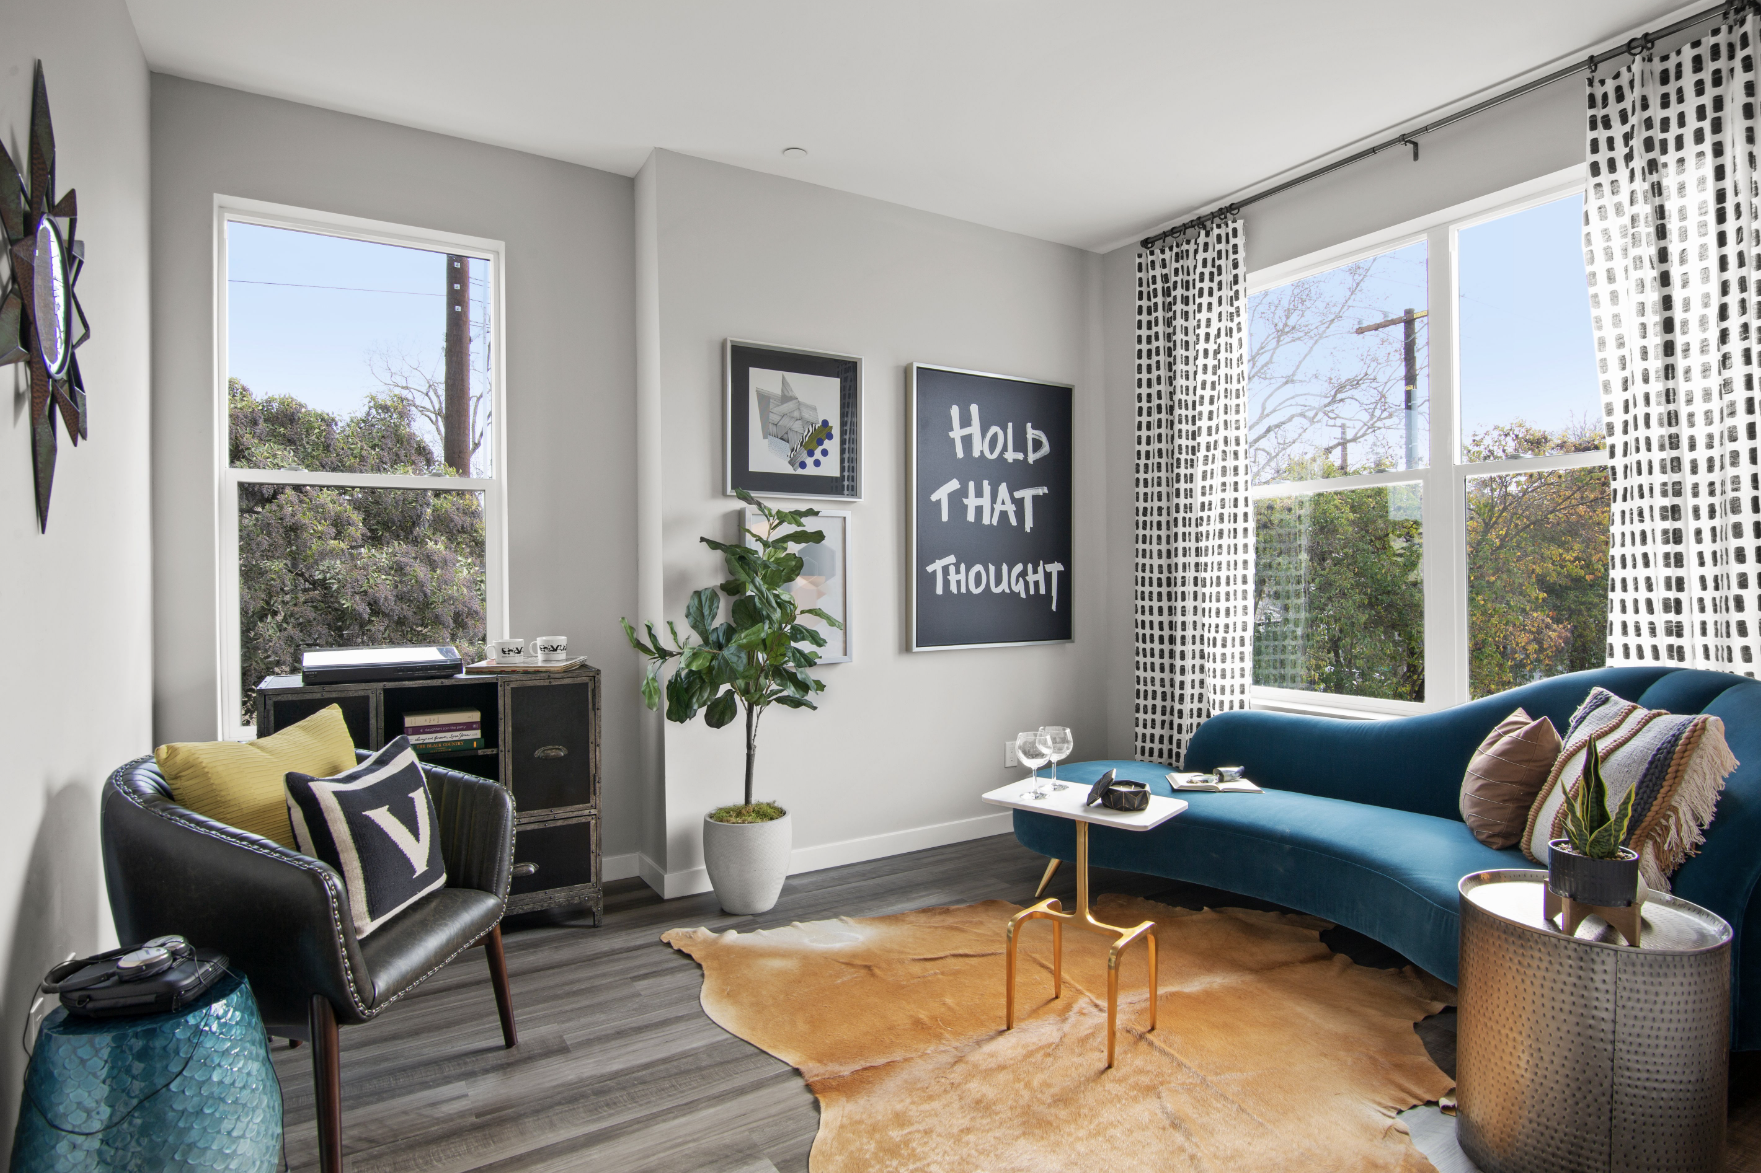 25 Small Apartment Living Room Ideas For A Cozy Home Makeover